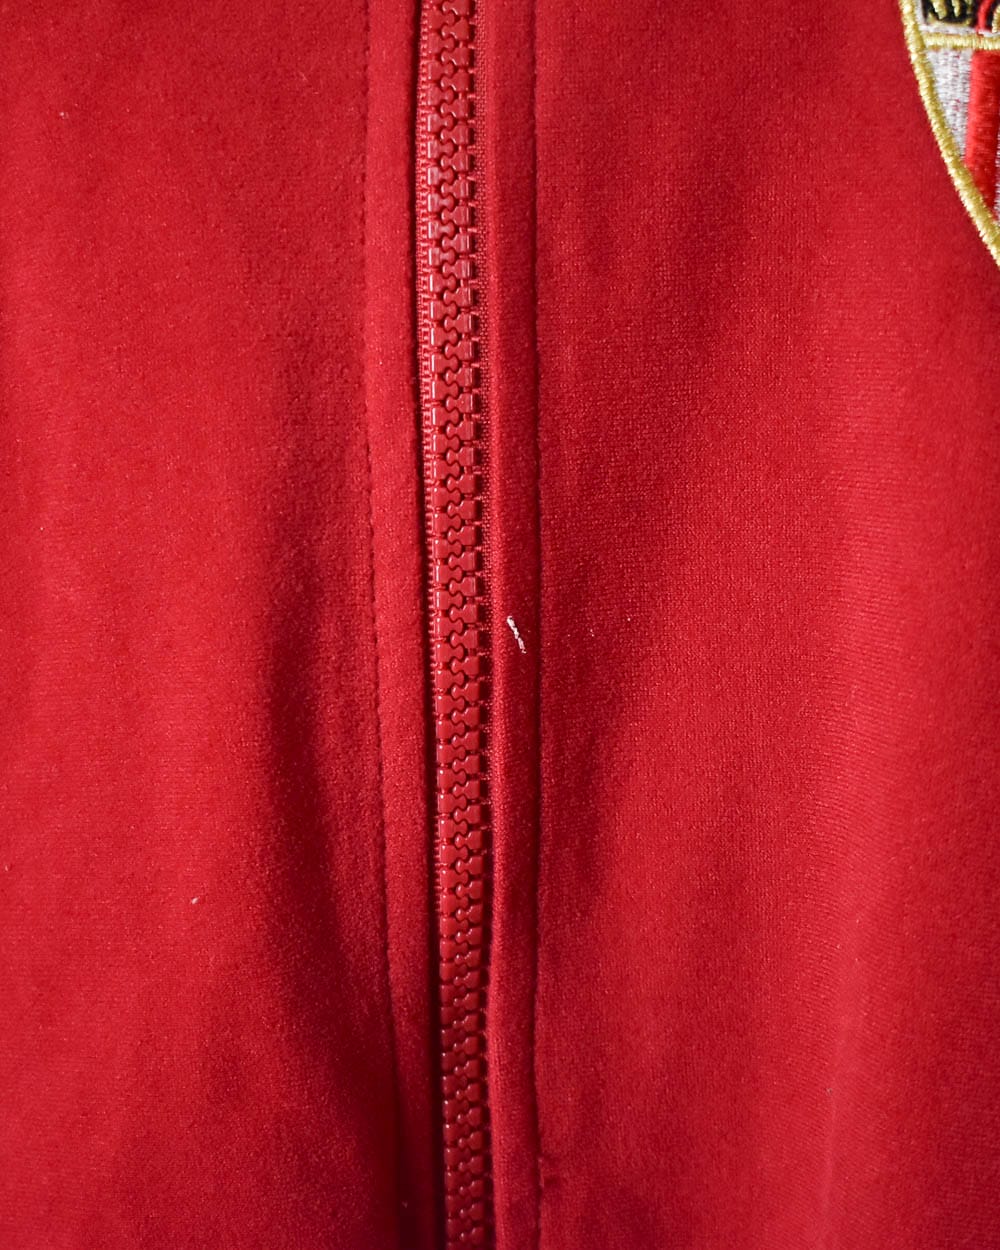 Red Umbro Servilla 1995/96 Warmup Jacket - Large